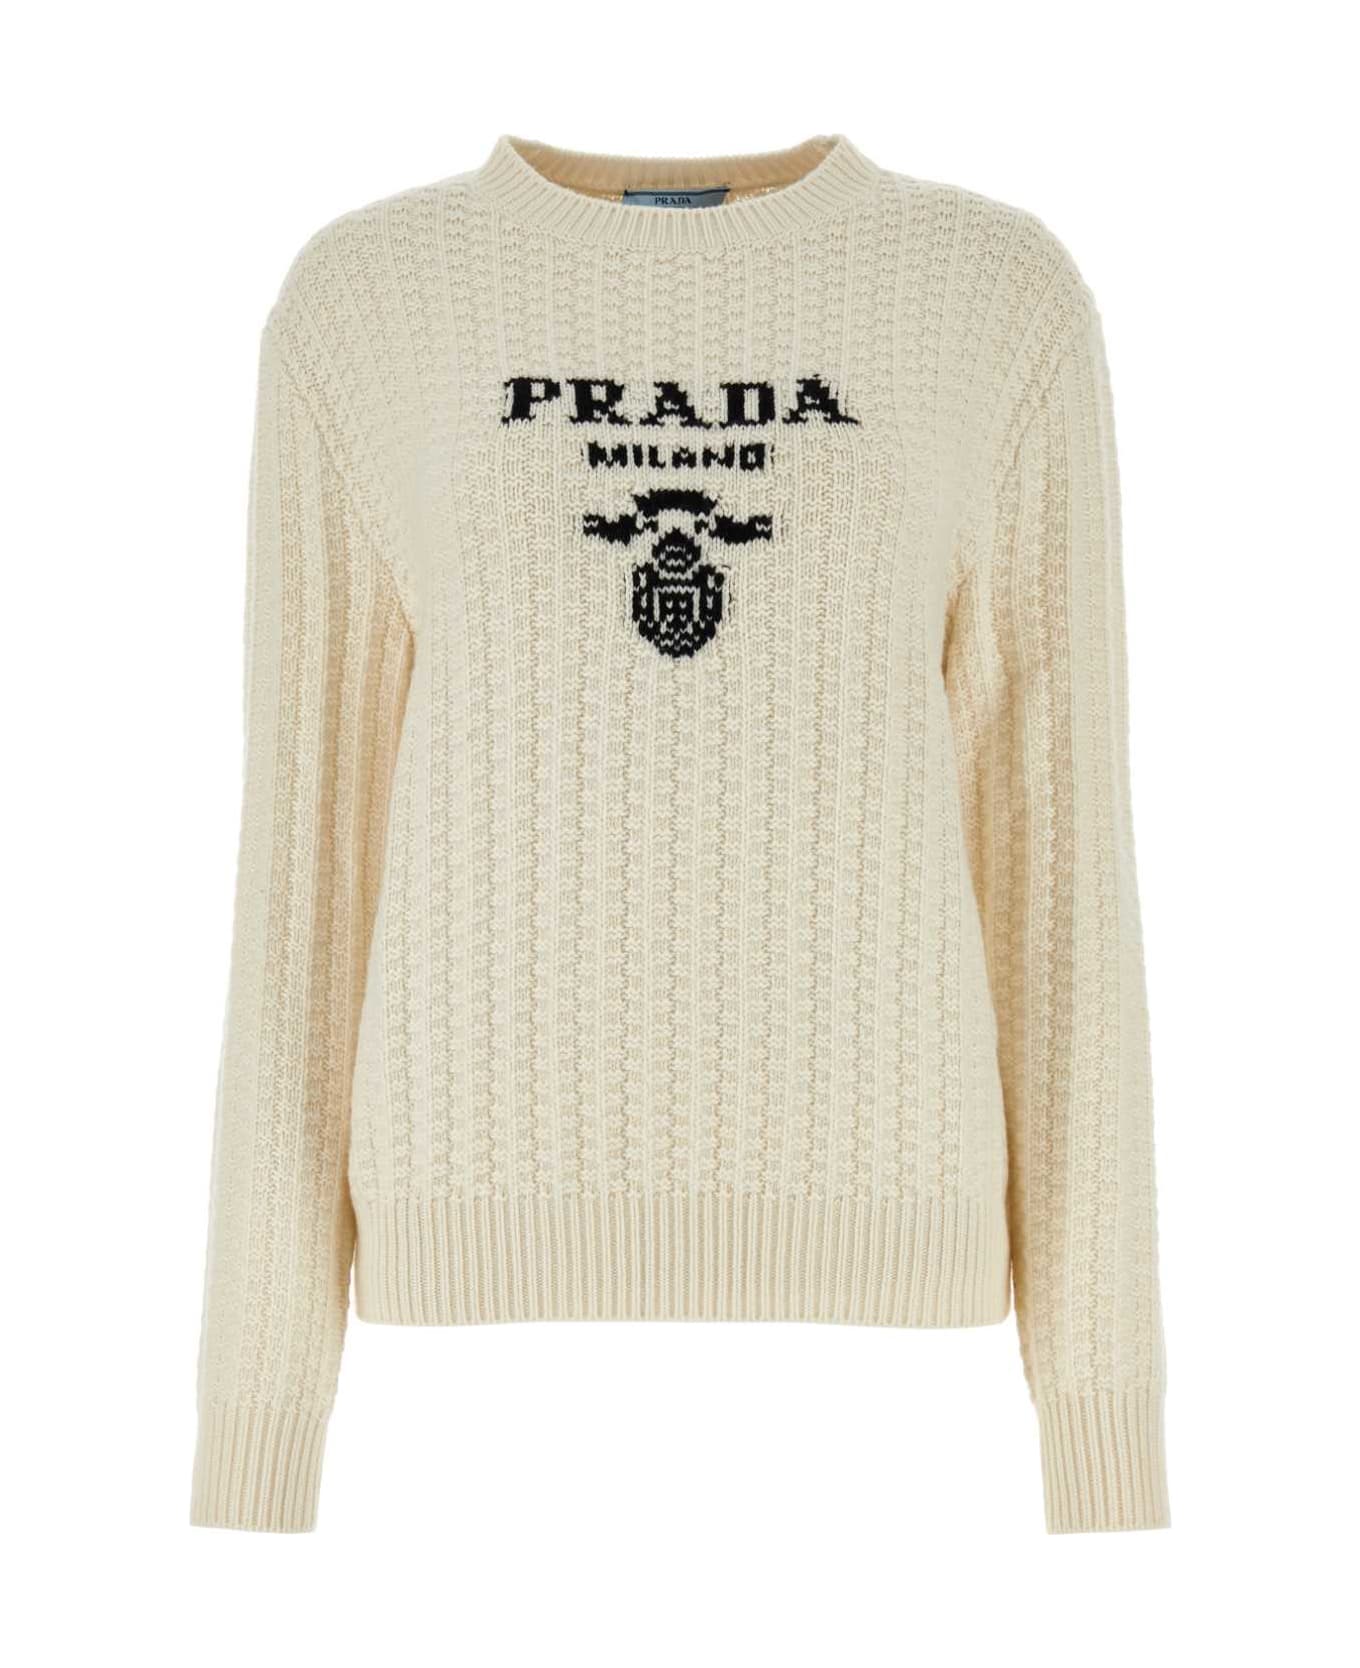 Prada White Cashmere Sweater - BIANCO